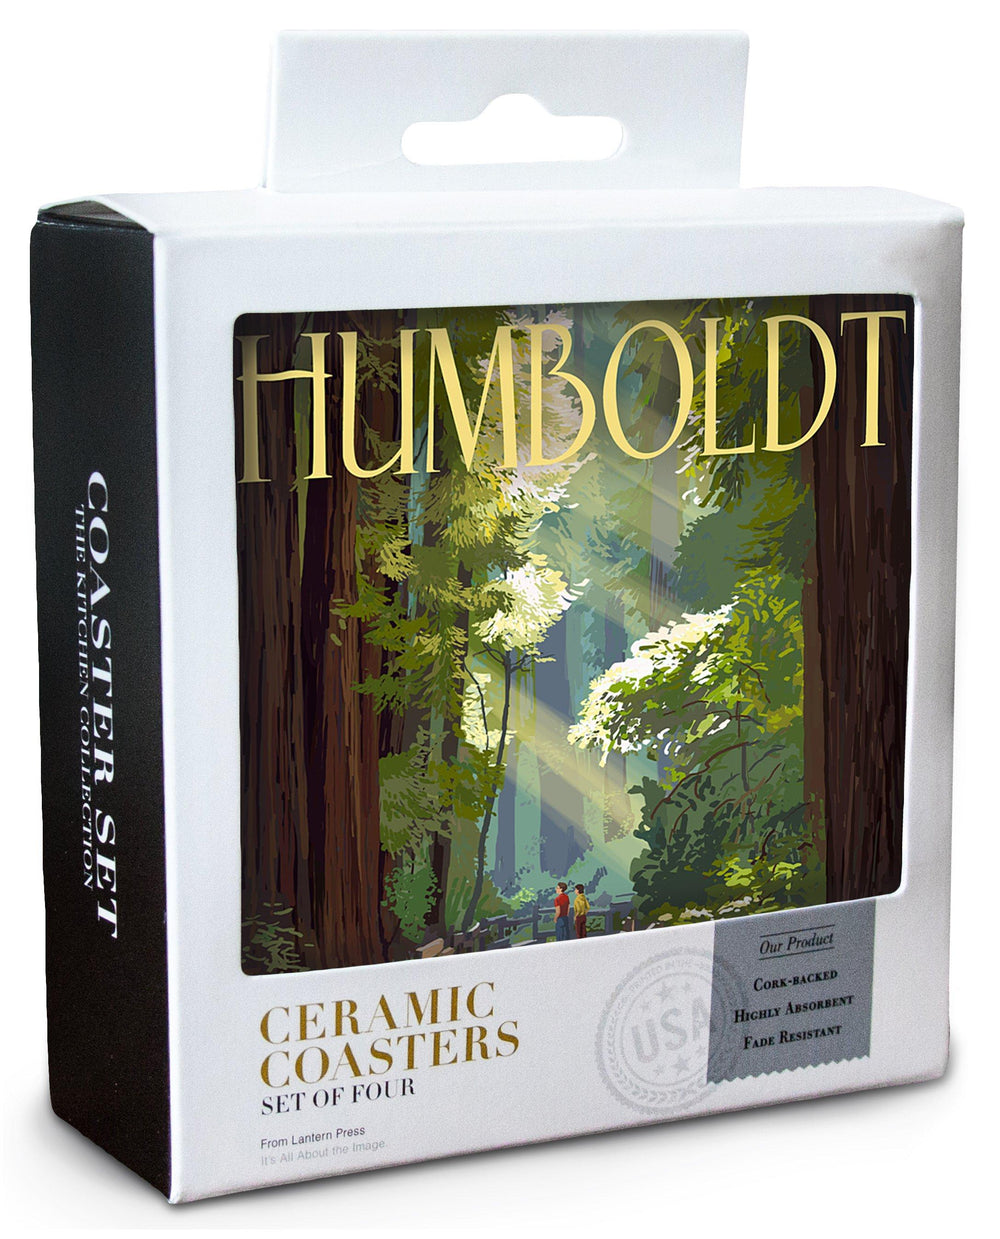 Humboldt, California, Redwoods, Pathway in Trees, Lantern Press Artwork, Coaster Set Coasters Lantern Press 